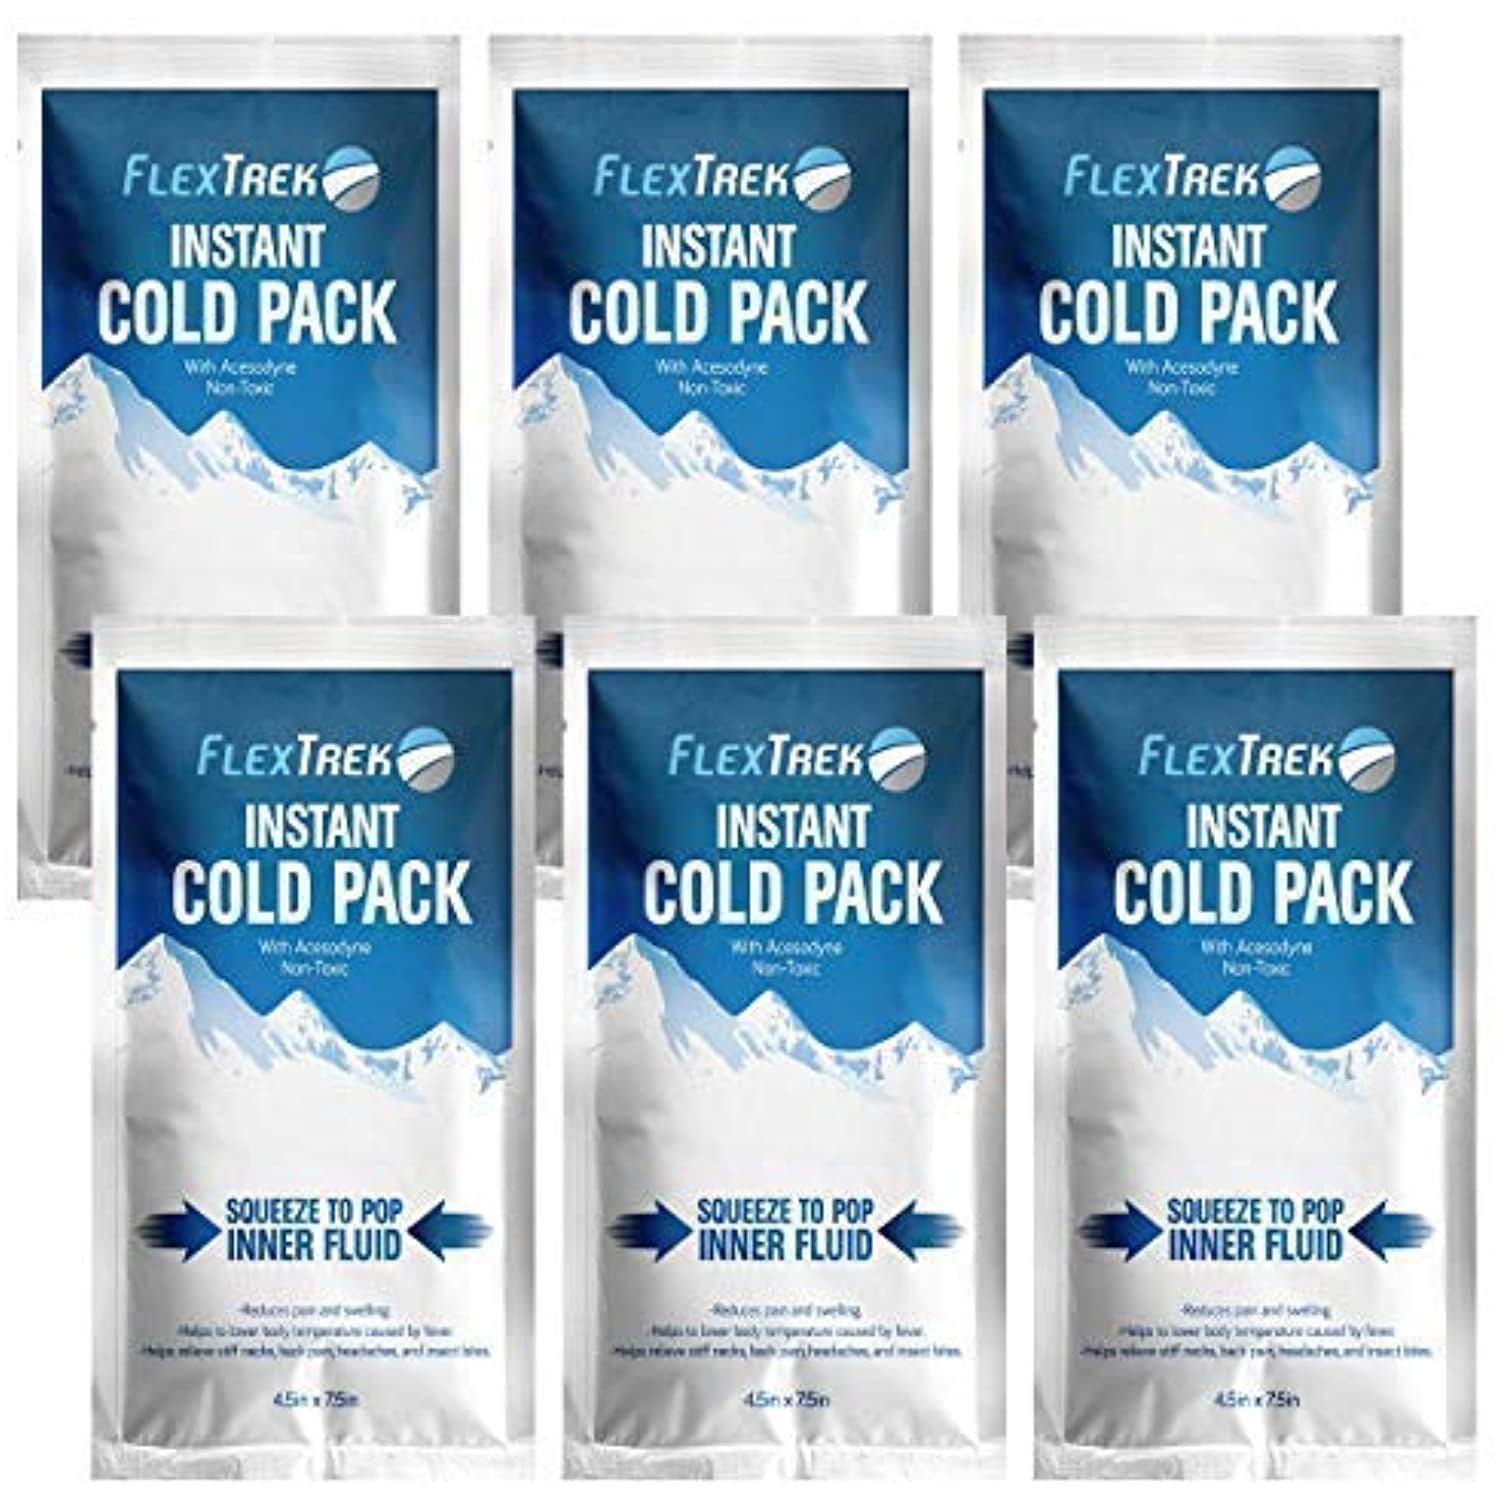 Cold pack. Краска Ice Pack-. Сигареты айс колд. Instant Cold Pack применение.